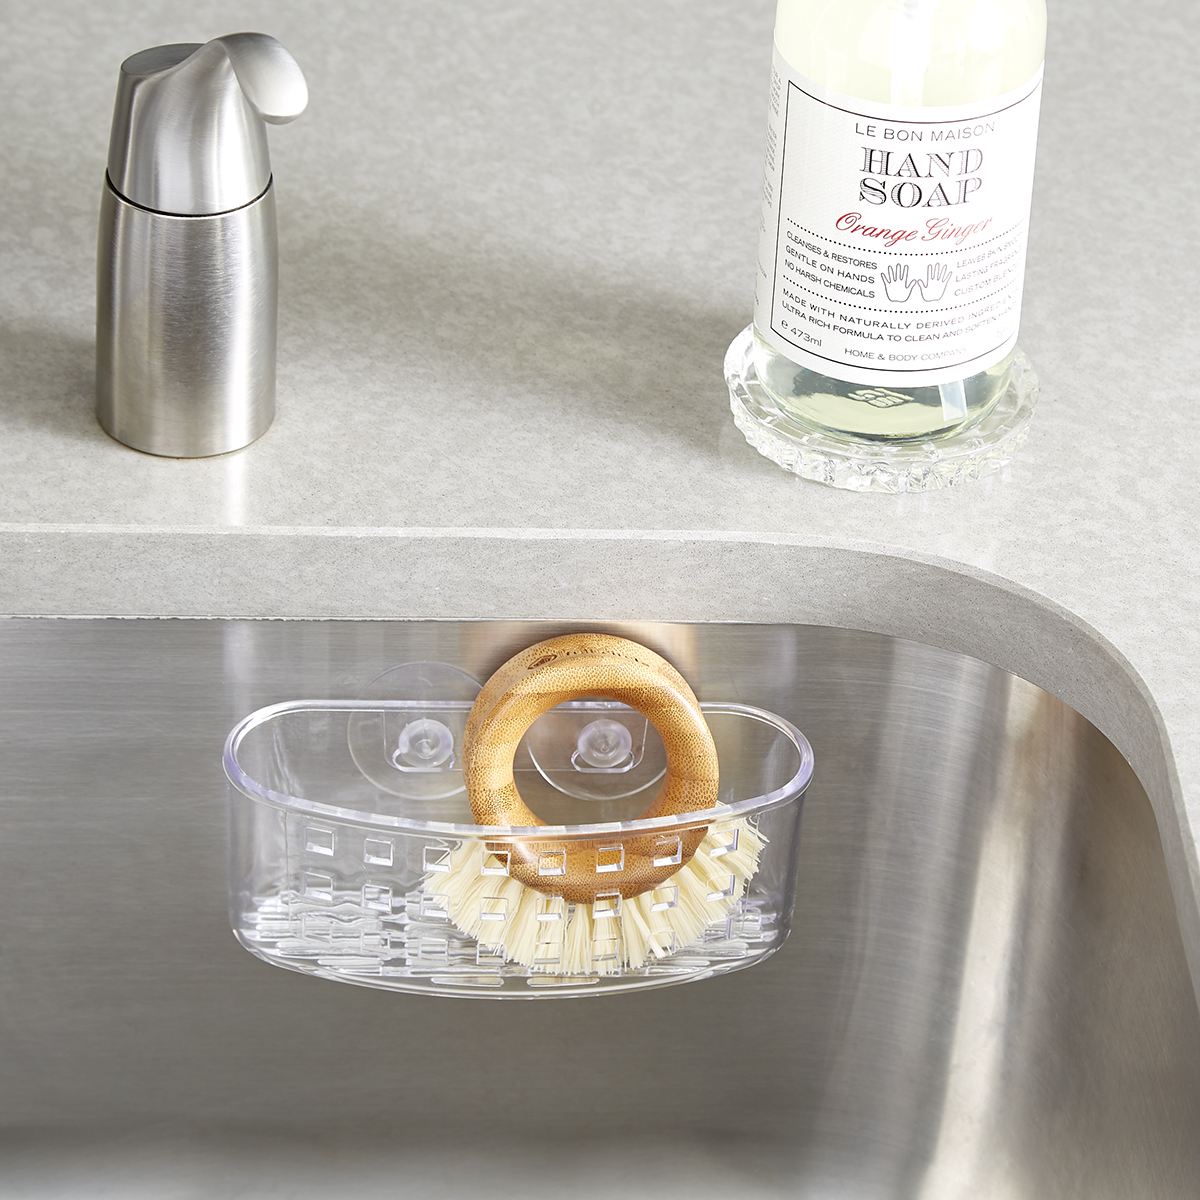 Soap Opera Sponge Holder for Kitchen Sink Includes 1 Metal Scrubber - Bath  Accessories, Facebook Marketplace